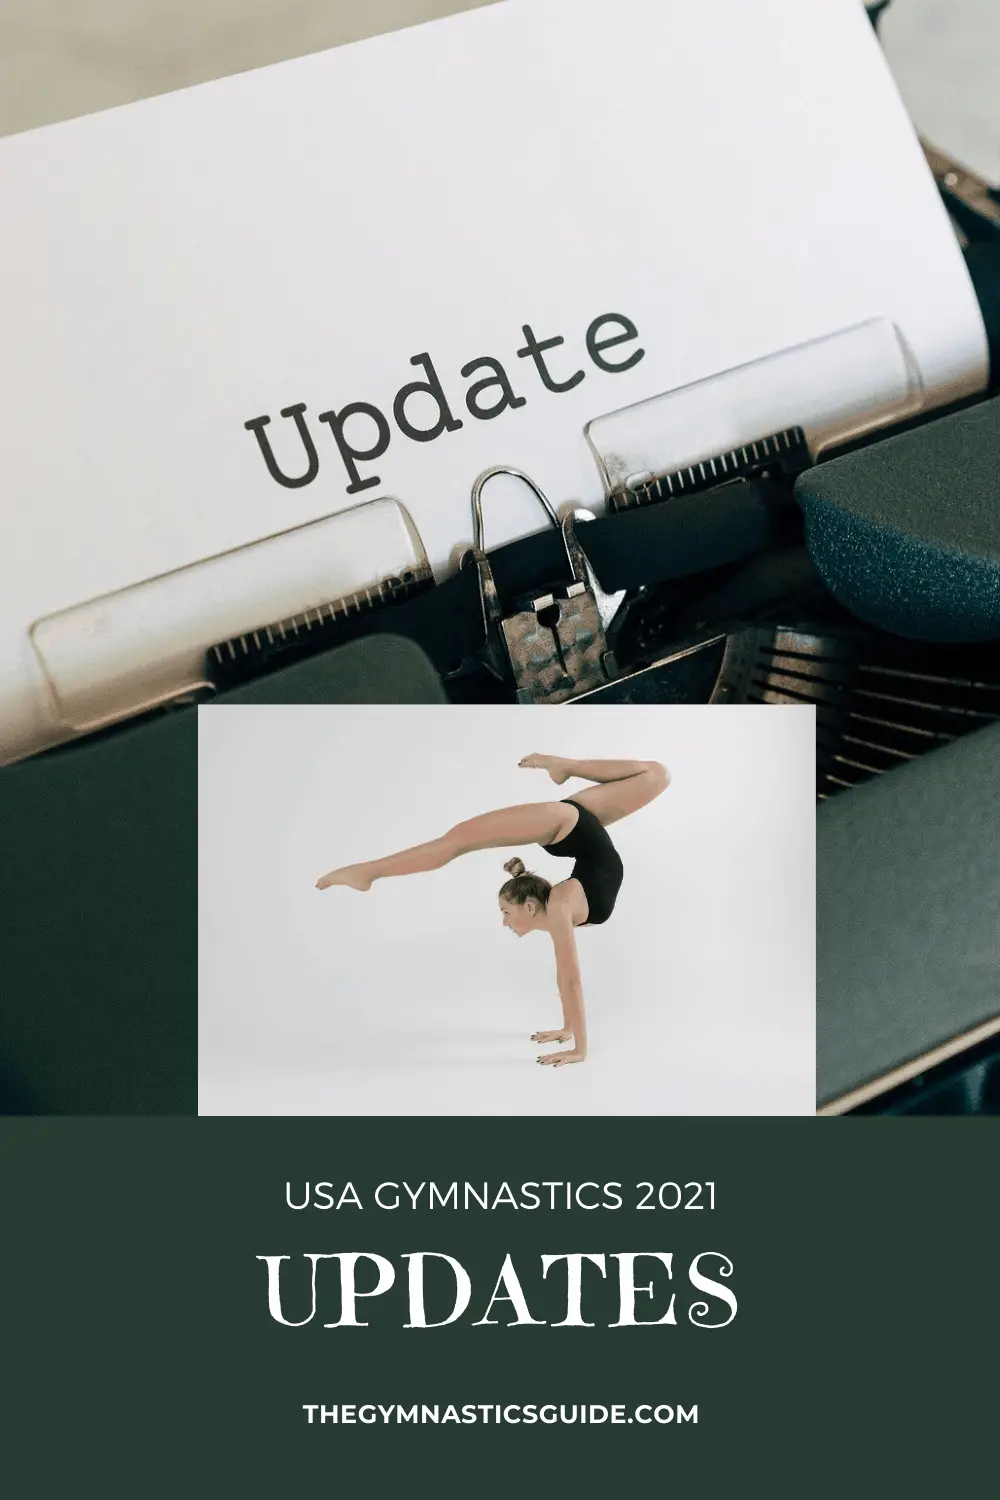 USA Gymnastics Updates May 2021